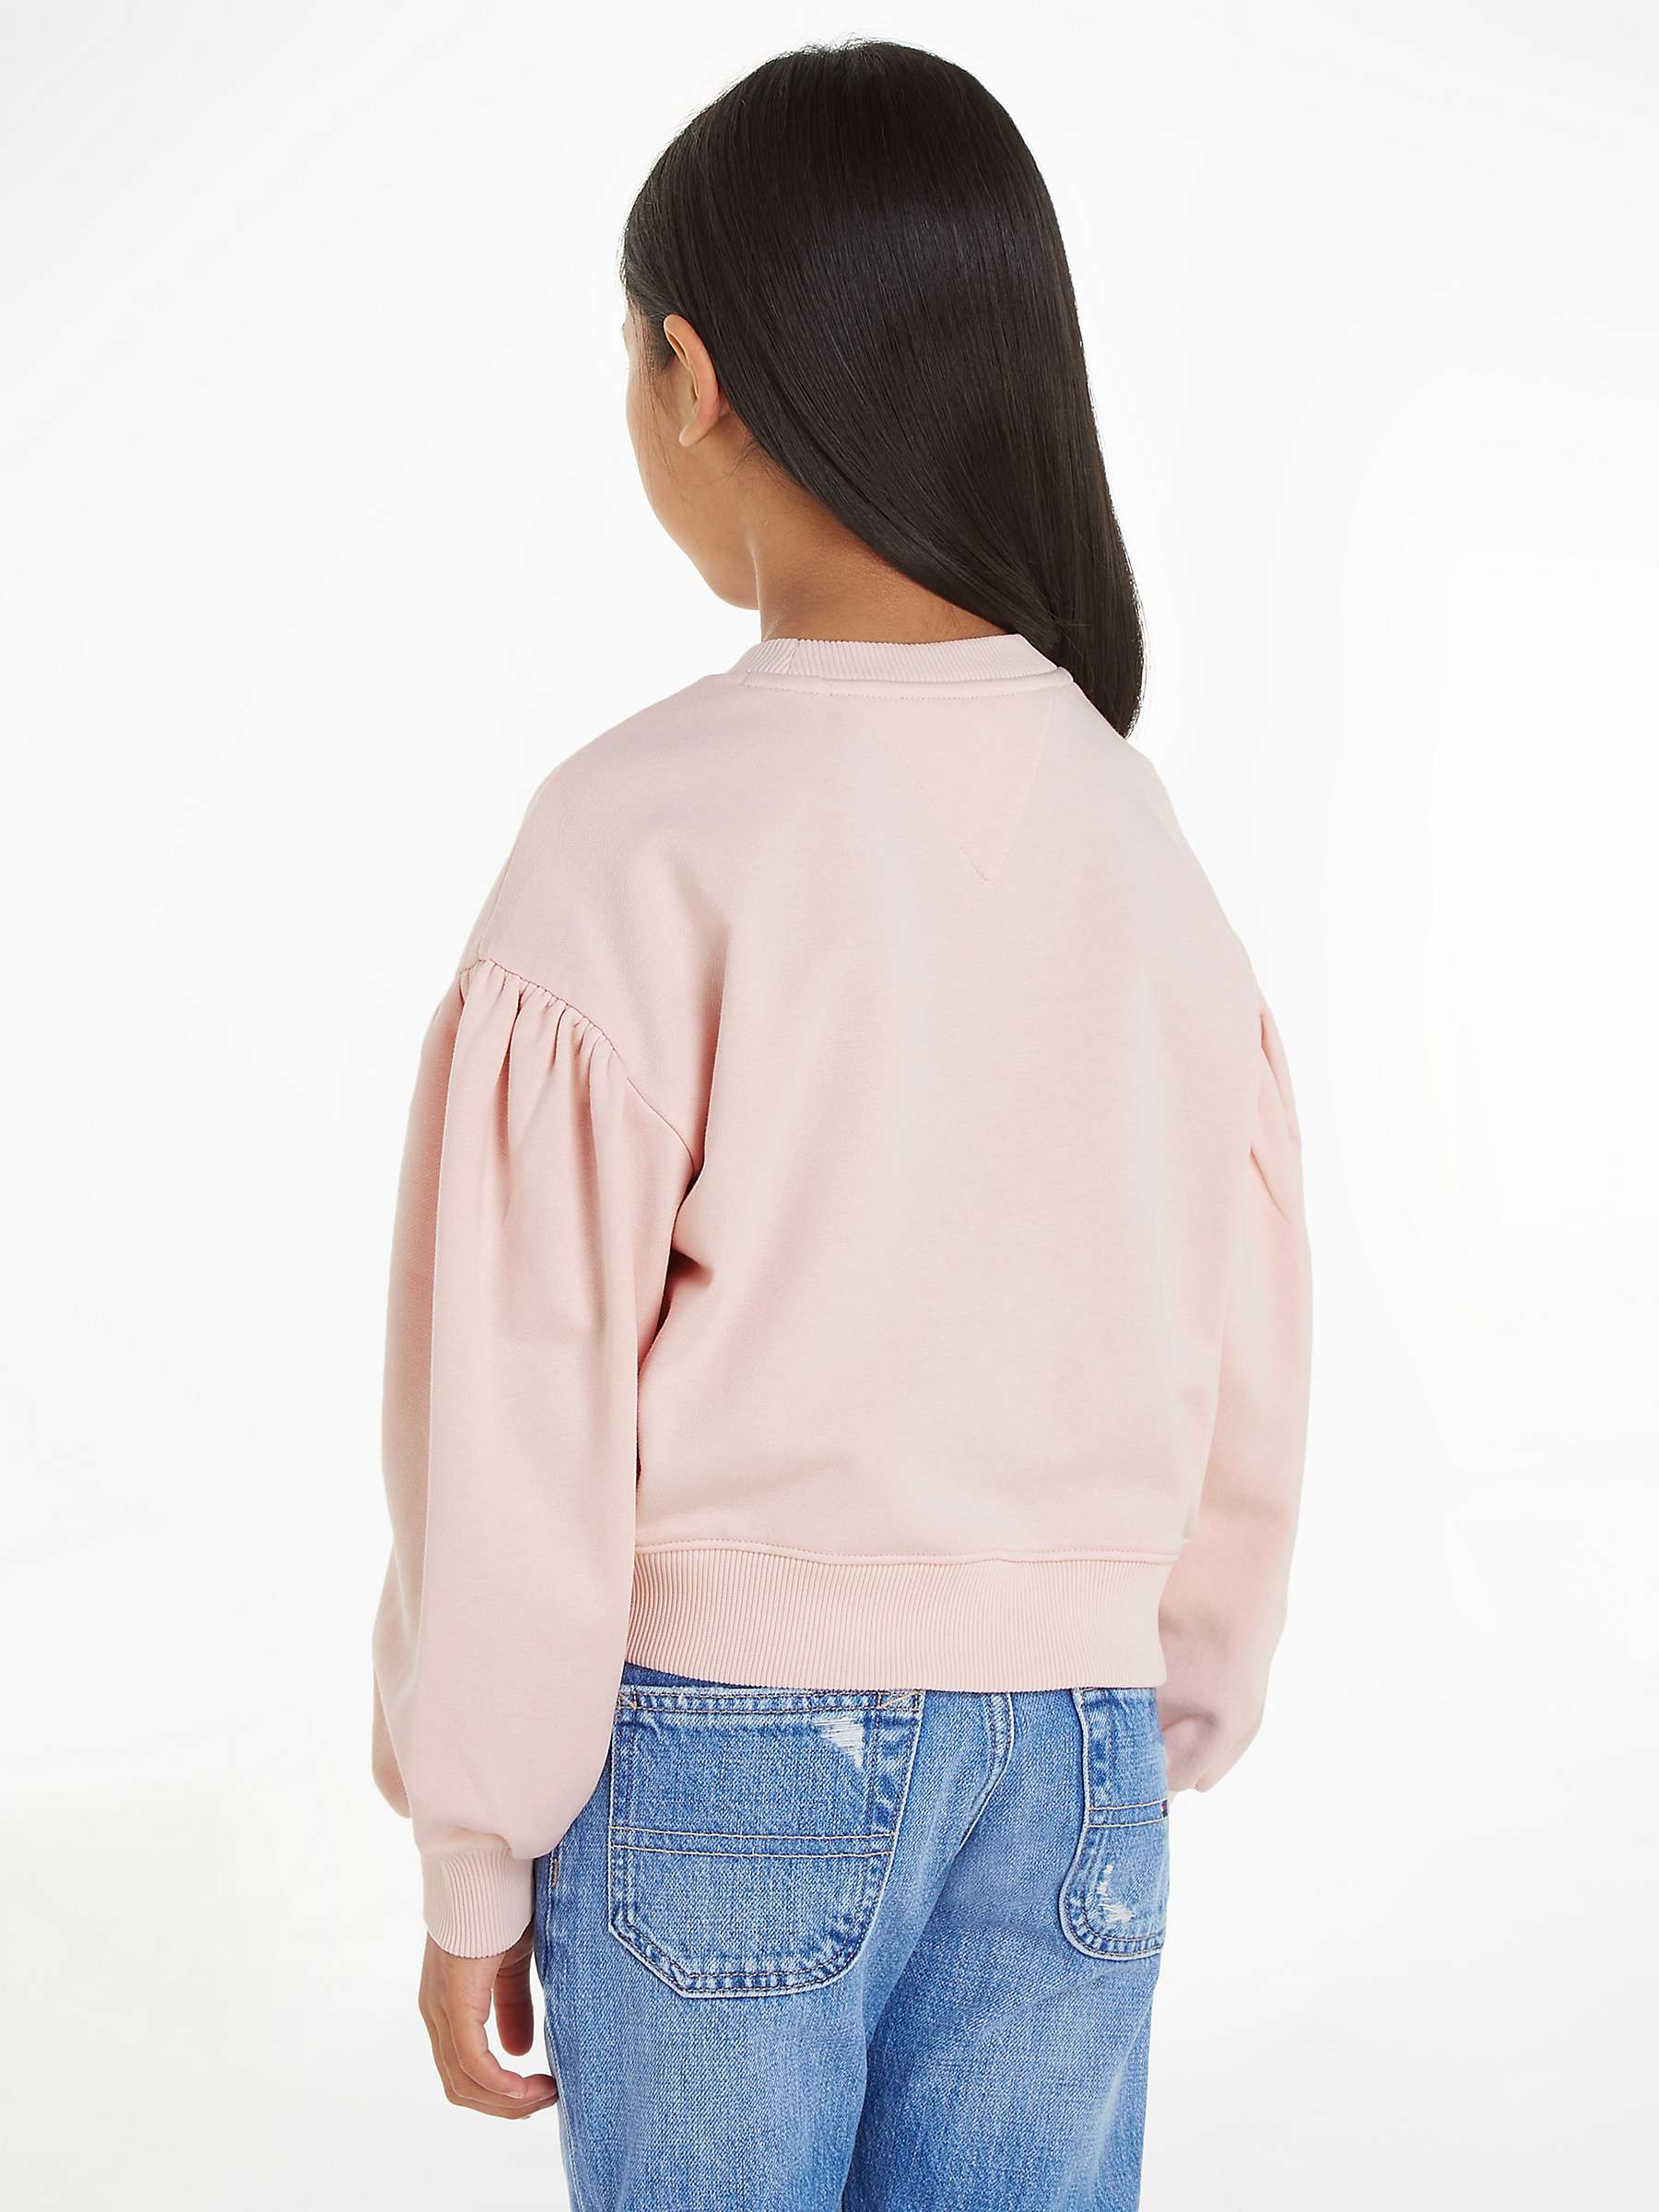 Buy Tommy Hilfiger Kids' Monotype Logo Sweatshirt, Whimsy Pink Online at johnlewis.com